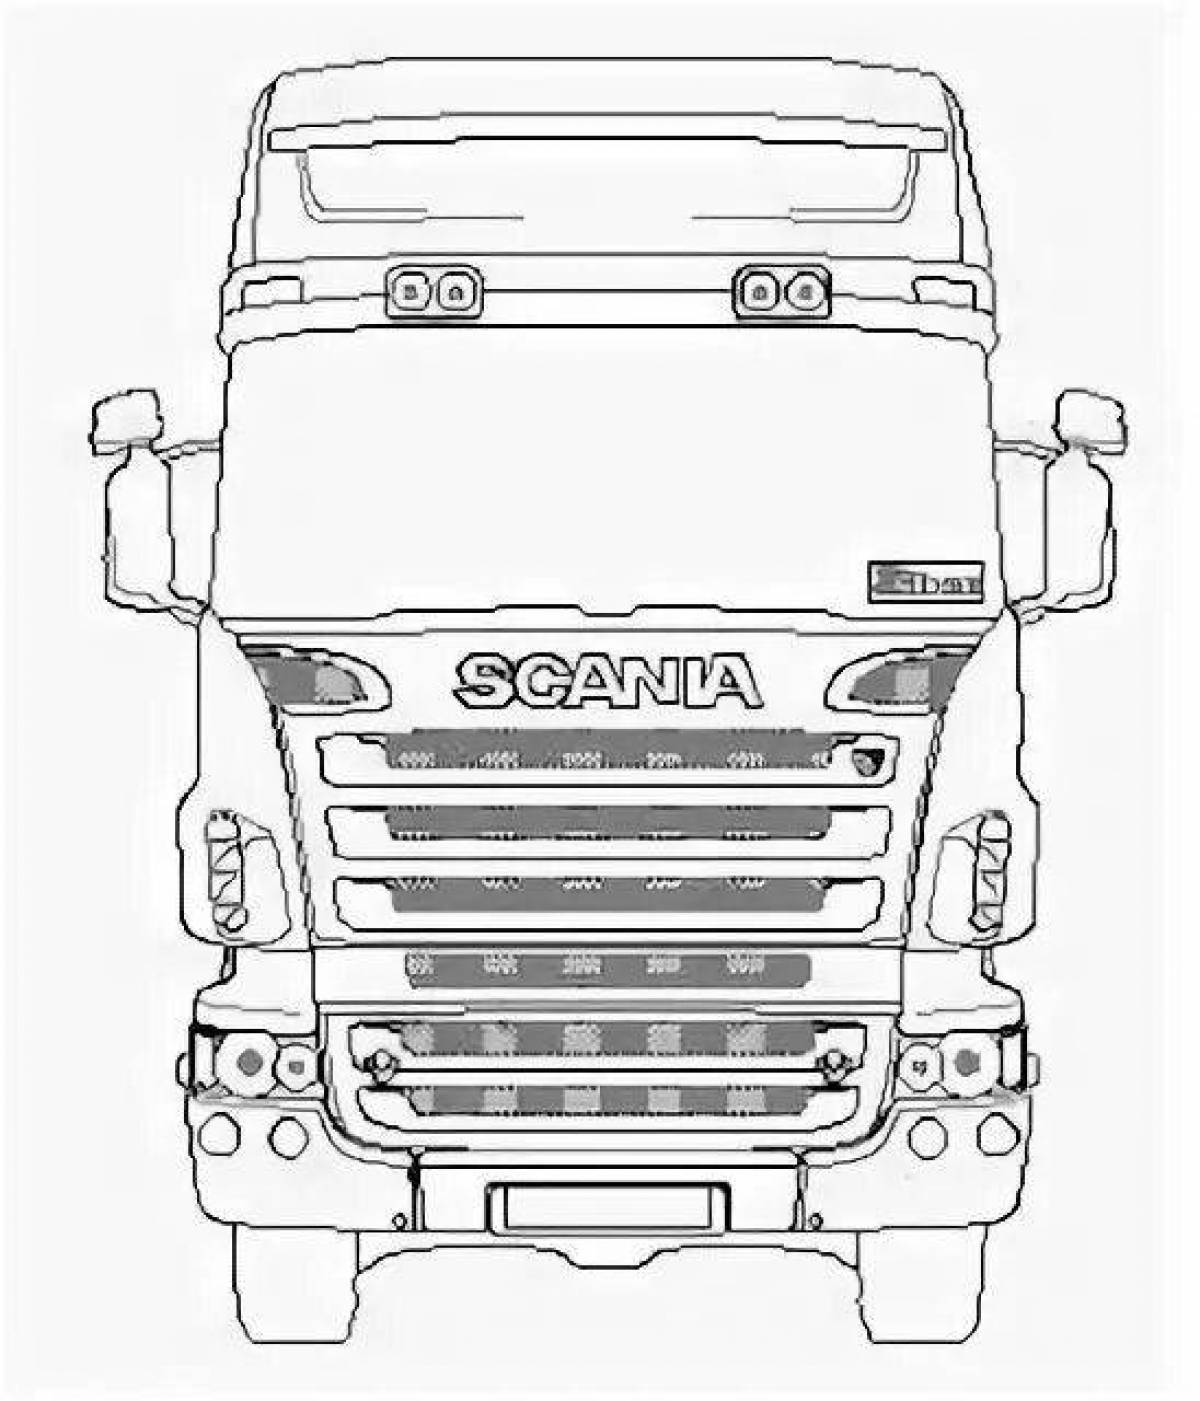 Scania r440a4x2la 2020